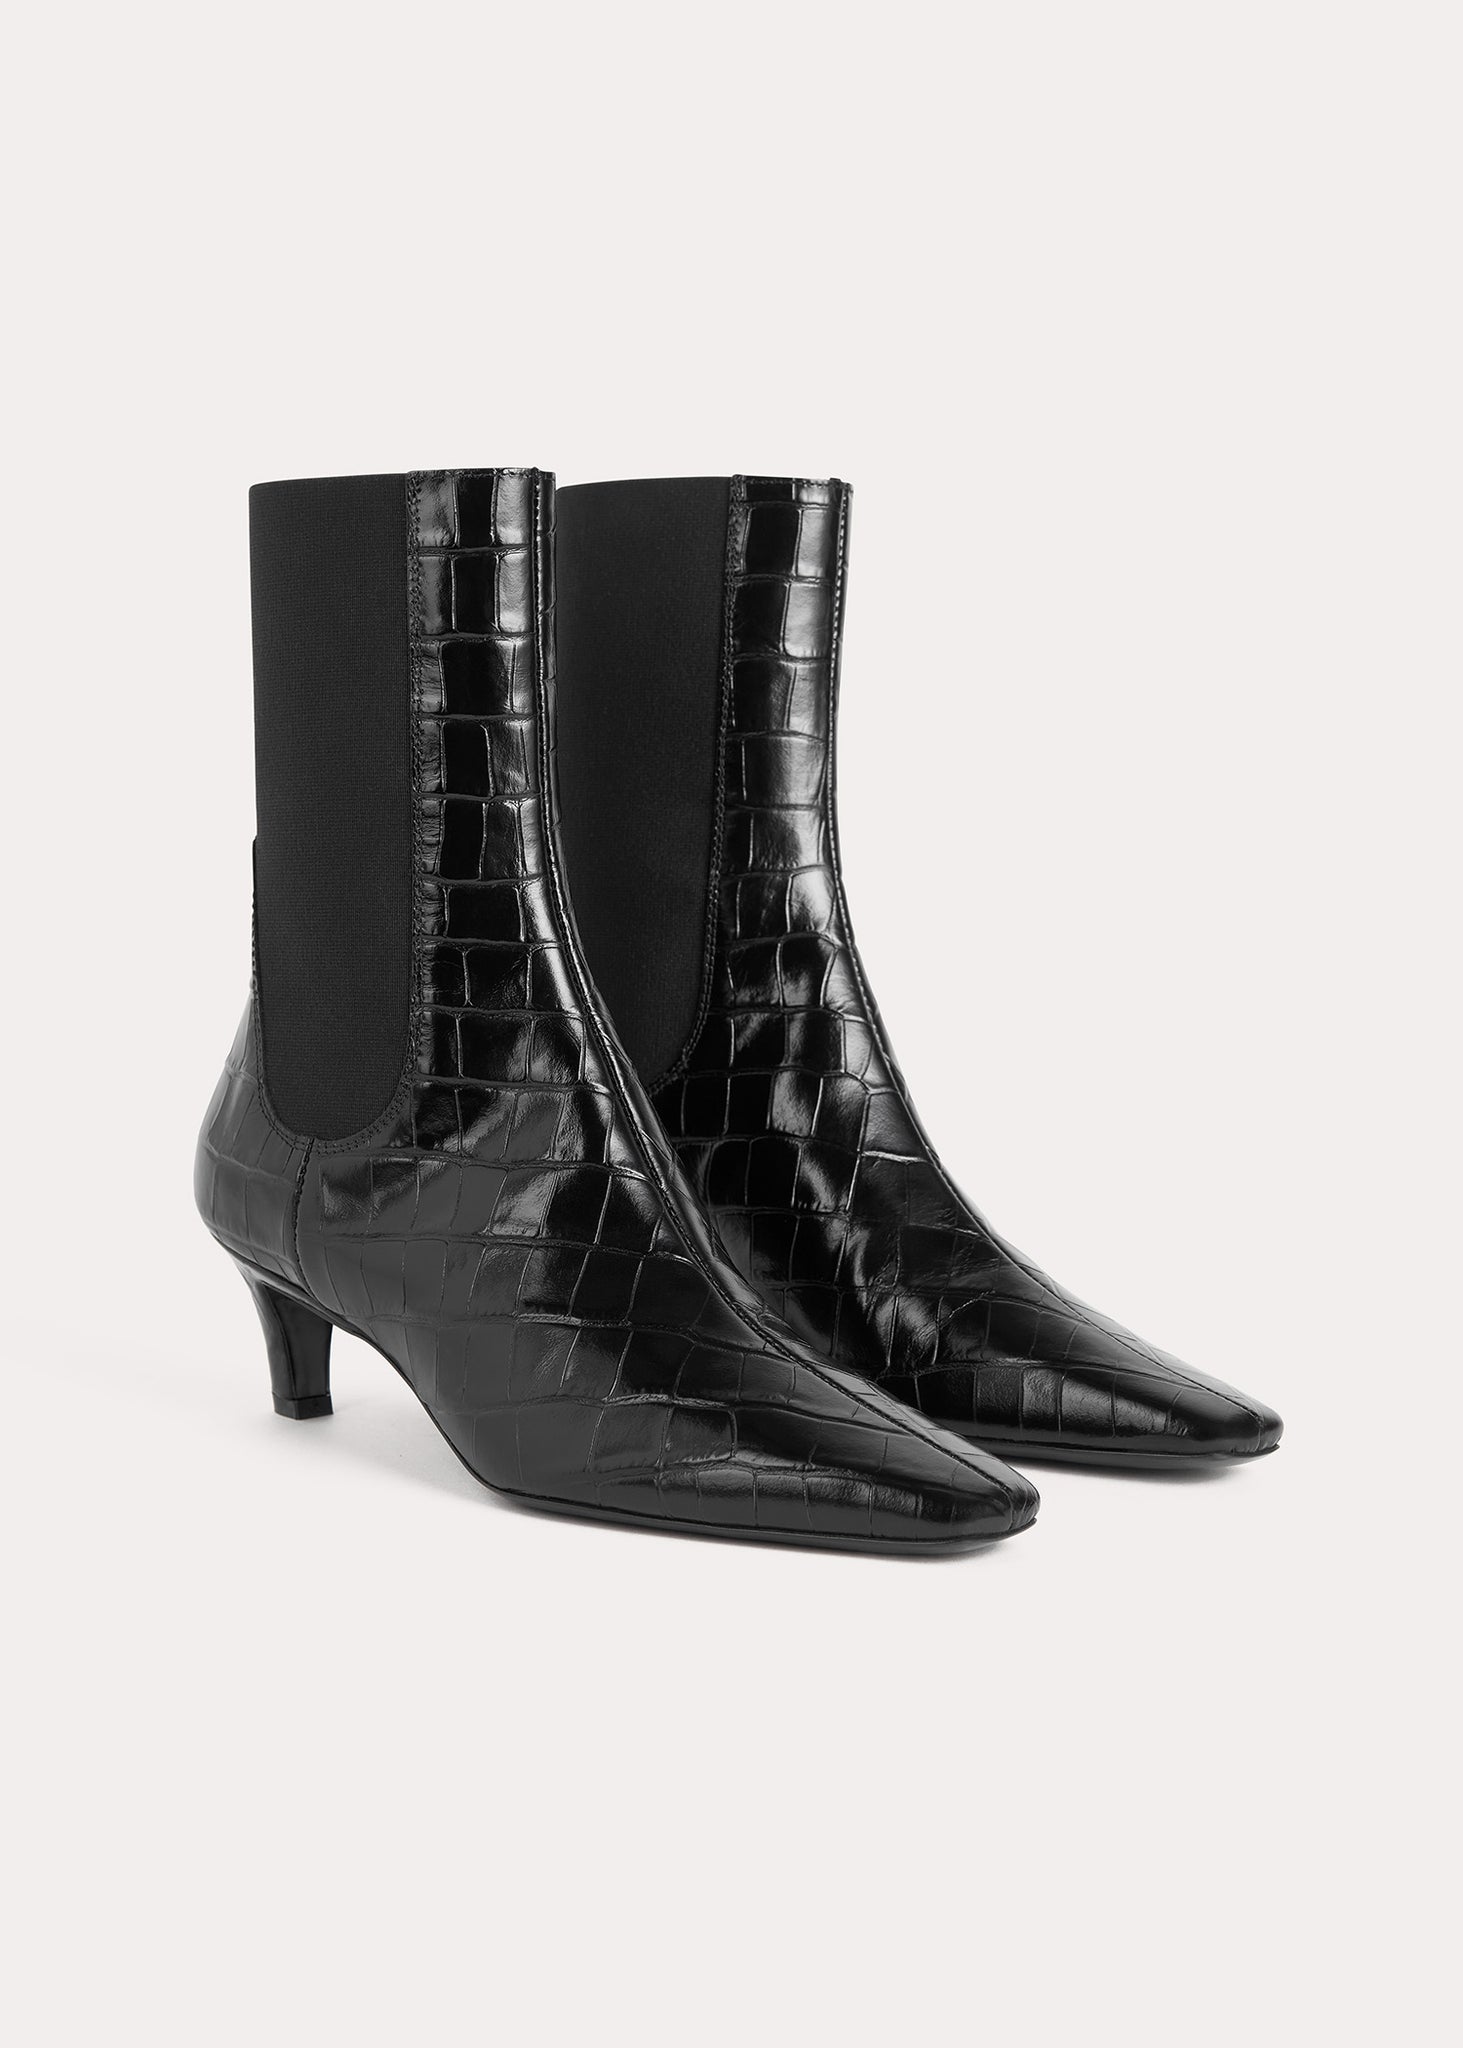 The Mid Heel Leather Boot black croco